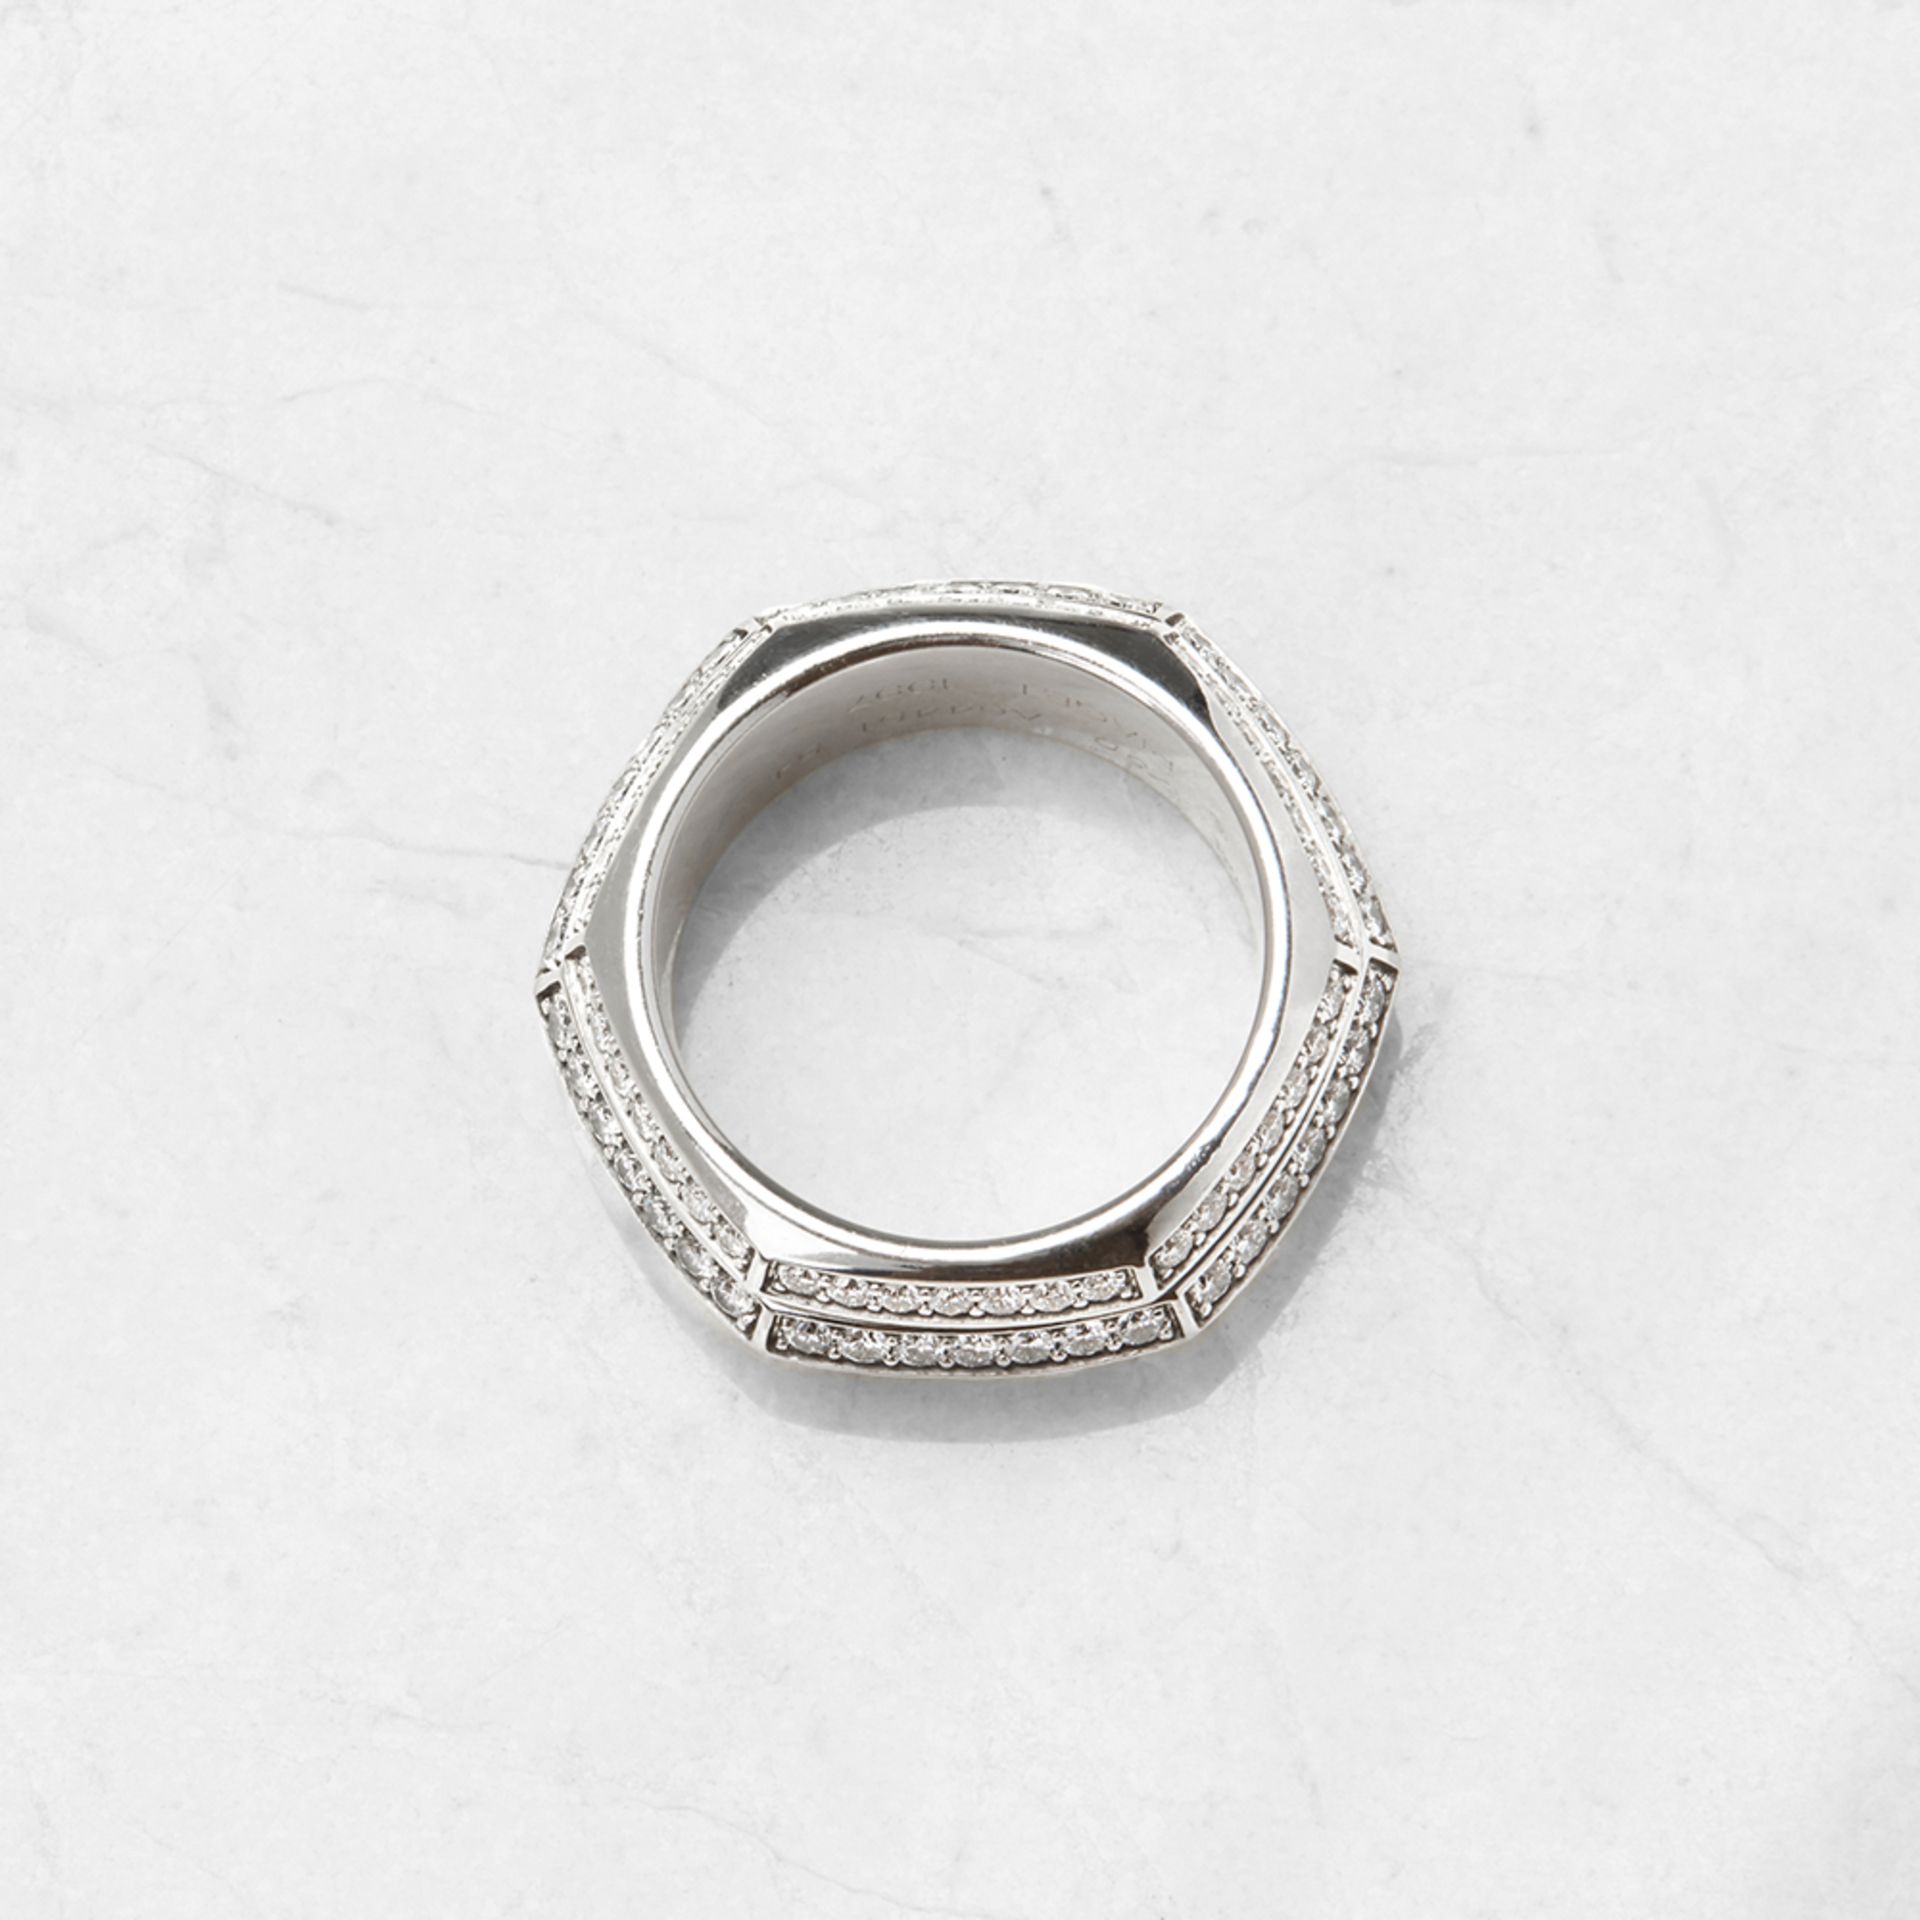 Piaget 18k White Gold Diamond Possession Ring - Image 5 of 7